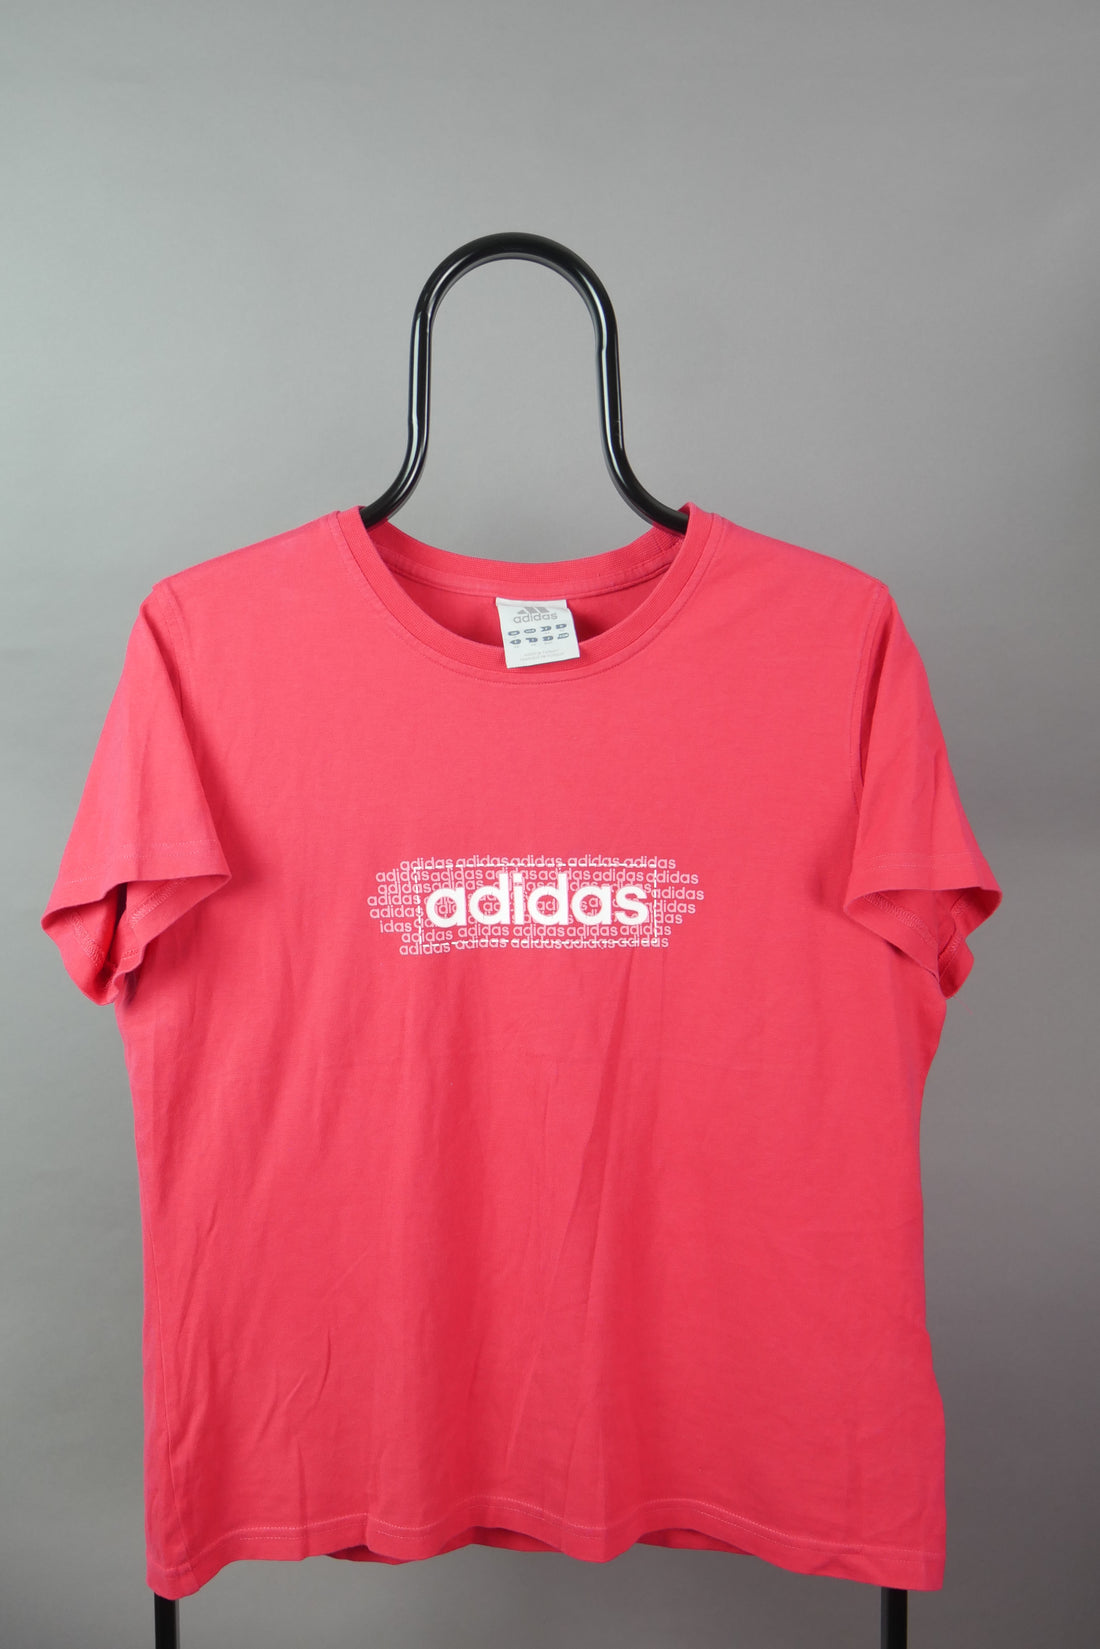 The Adidas Logo T-Shirt (UK16)